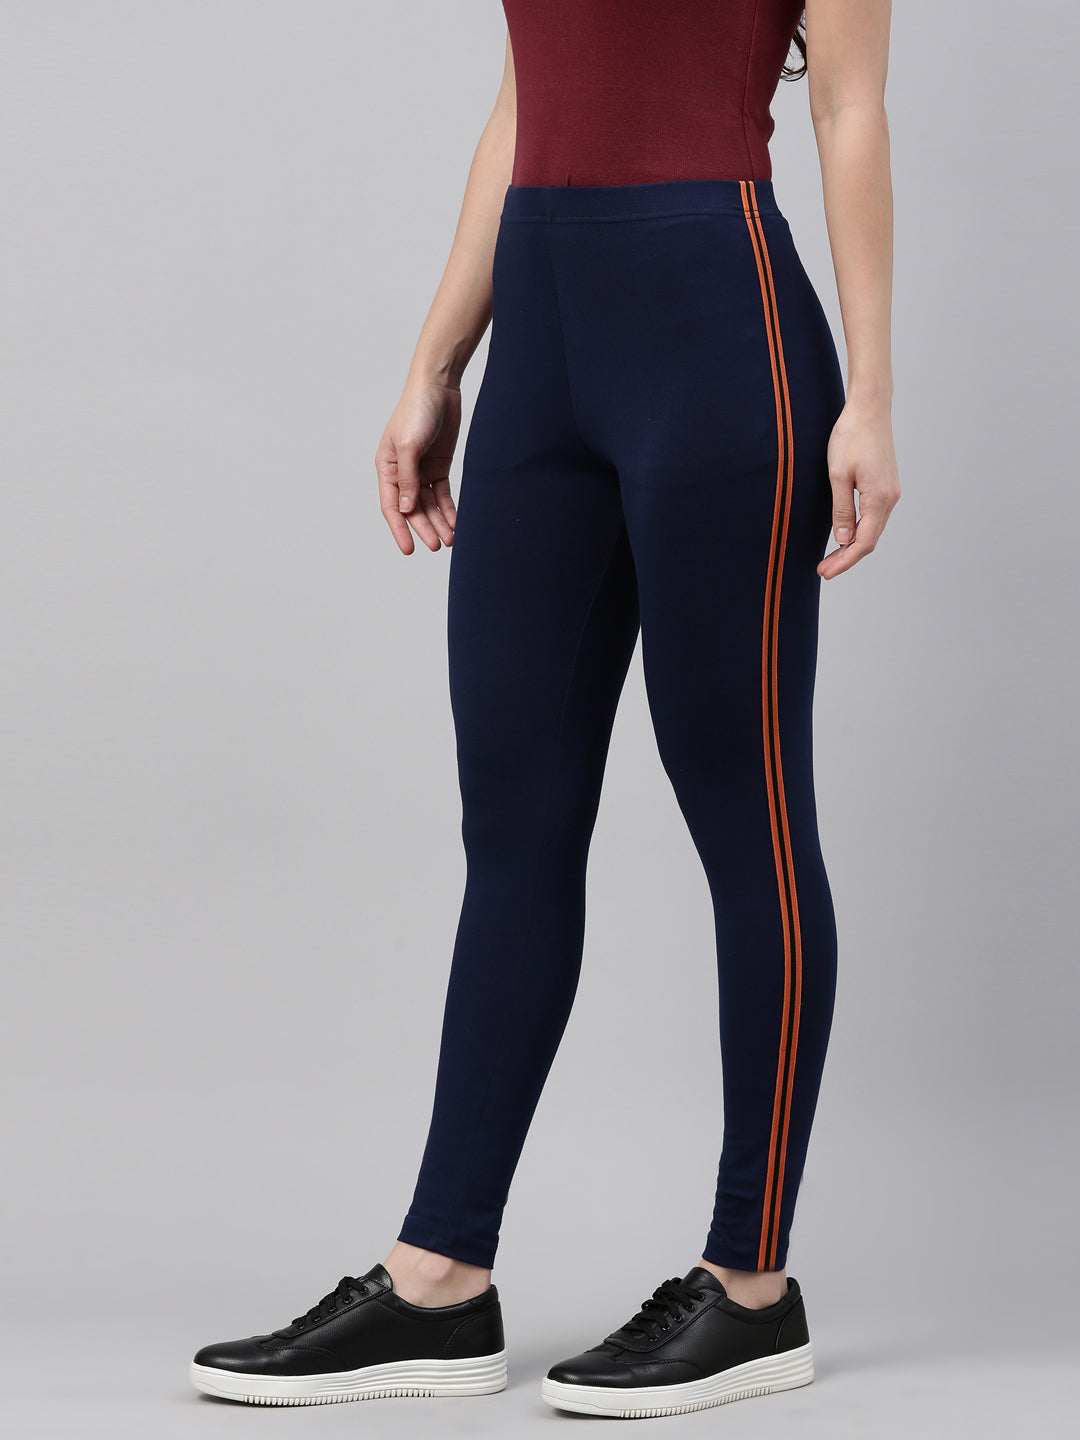 Buy Navy Blue and Orange Striped Workout Leggings for Women Soft Leggings  Online in India - Etsy